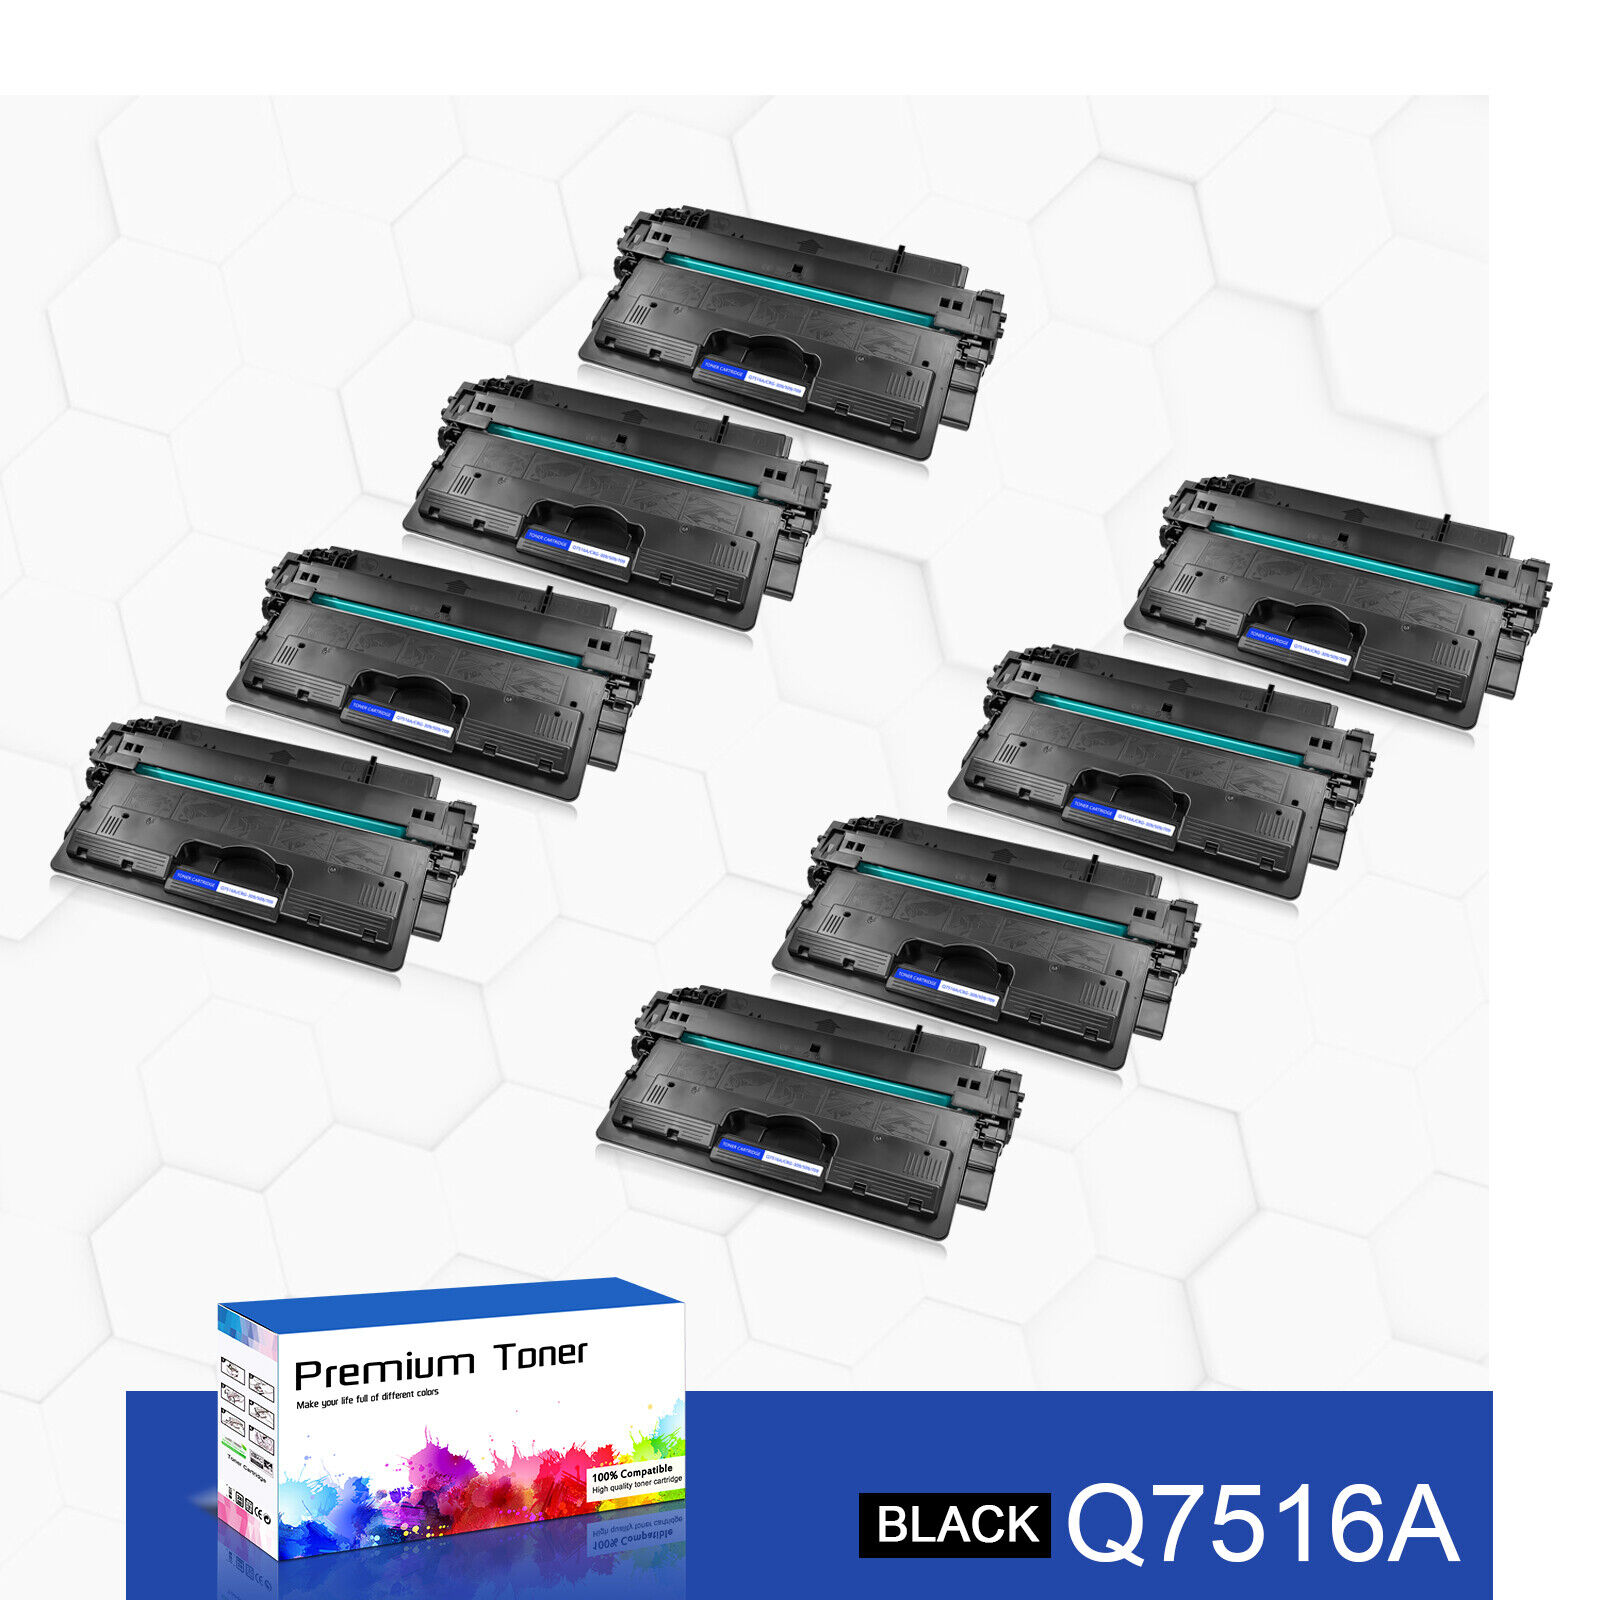 8PK Black Toner Cartridge Q7516A Compatible with HP LaserJet 5200 5200dtn 5200tn